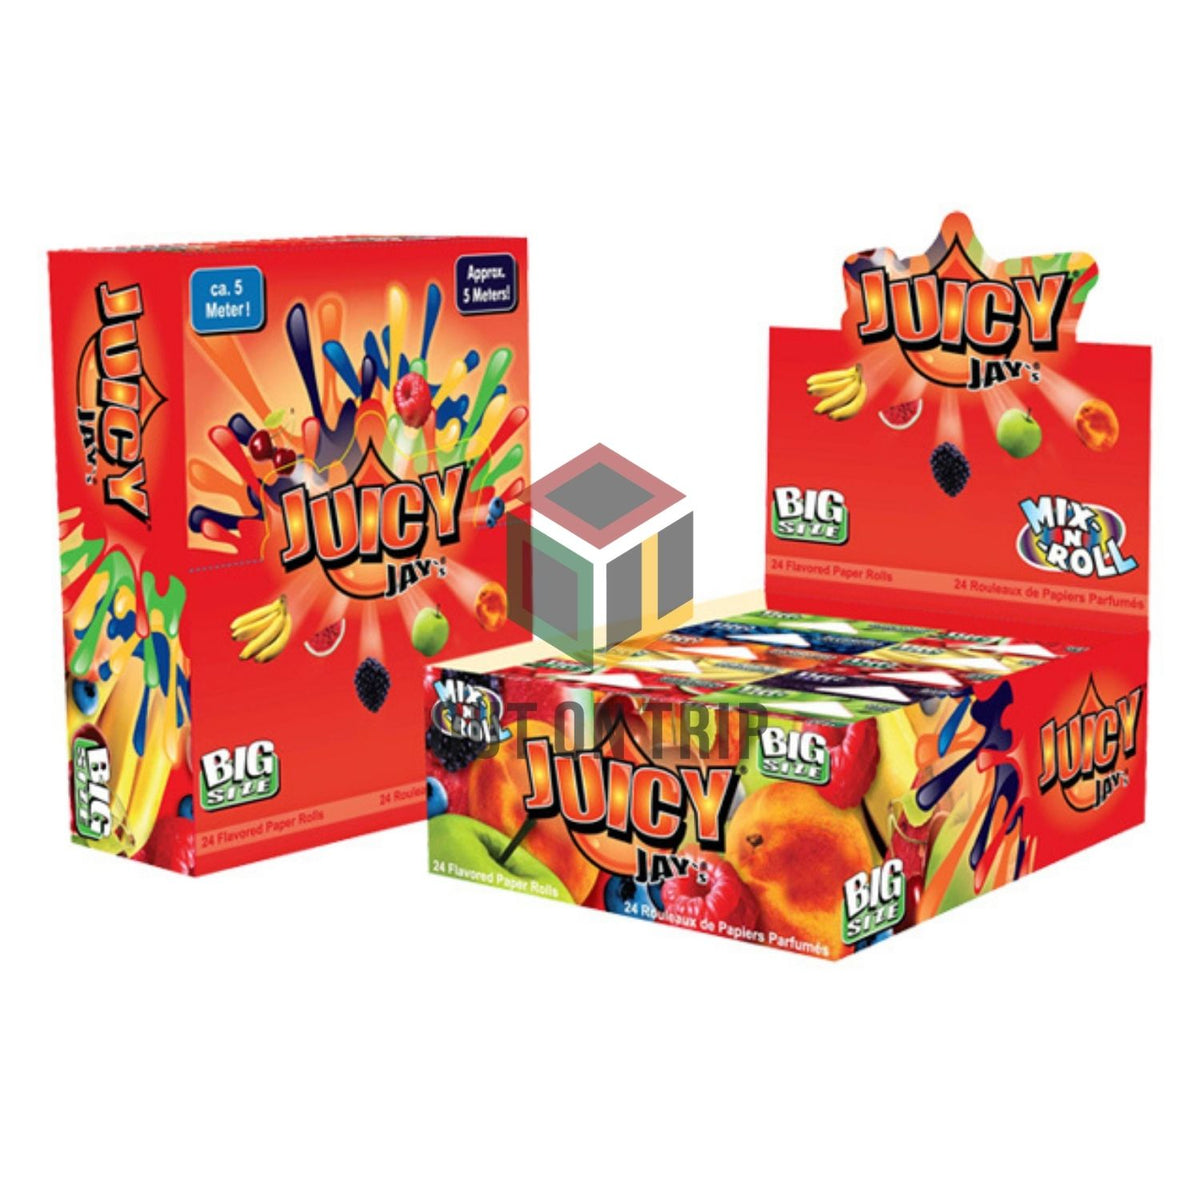 JUICY JAY KING SIZE MIX FLAVORS BOX (24 packs per box)